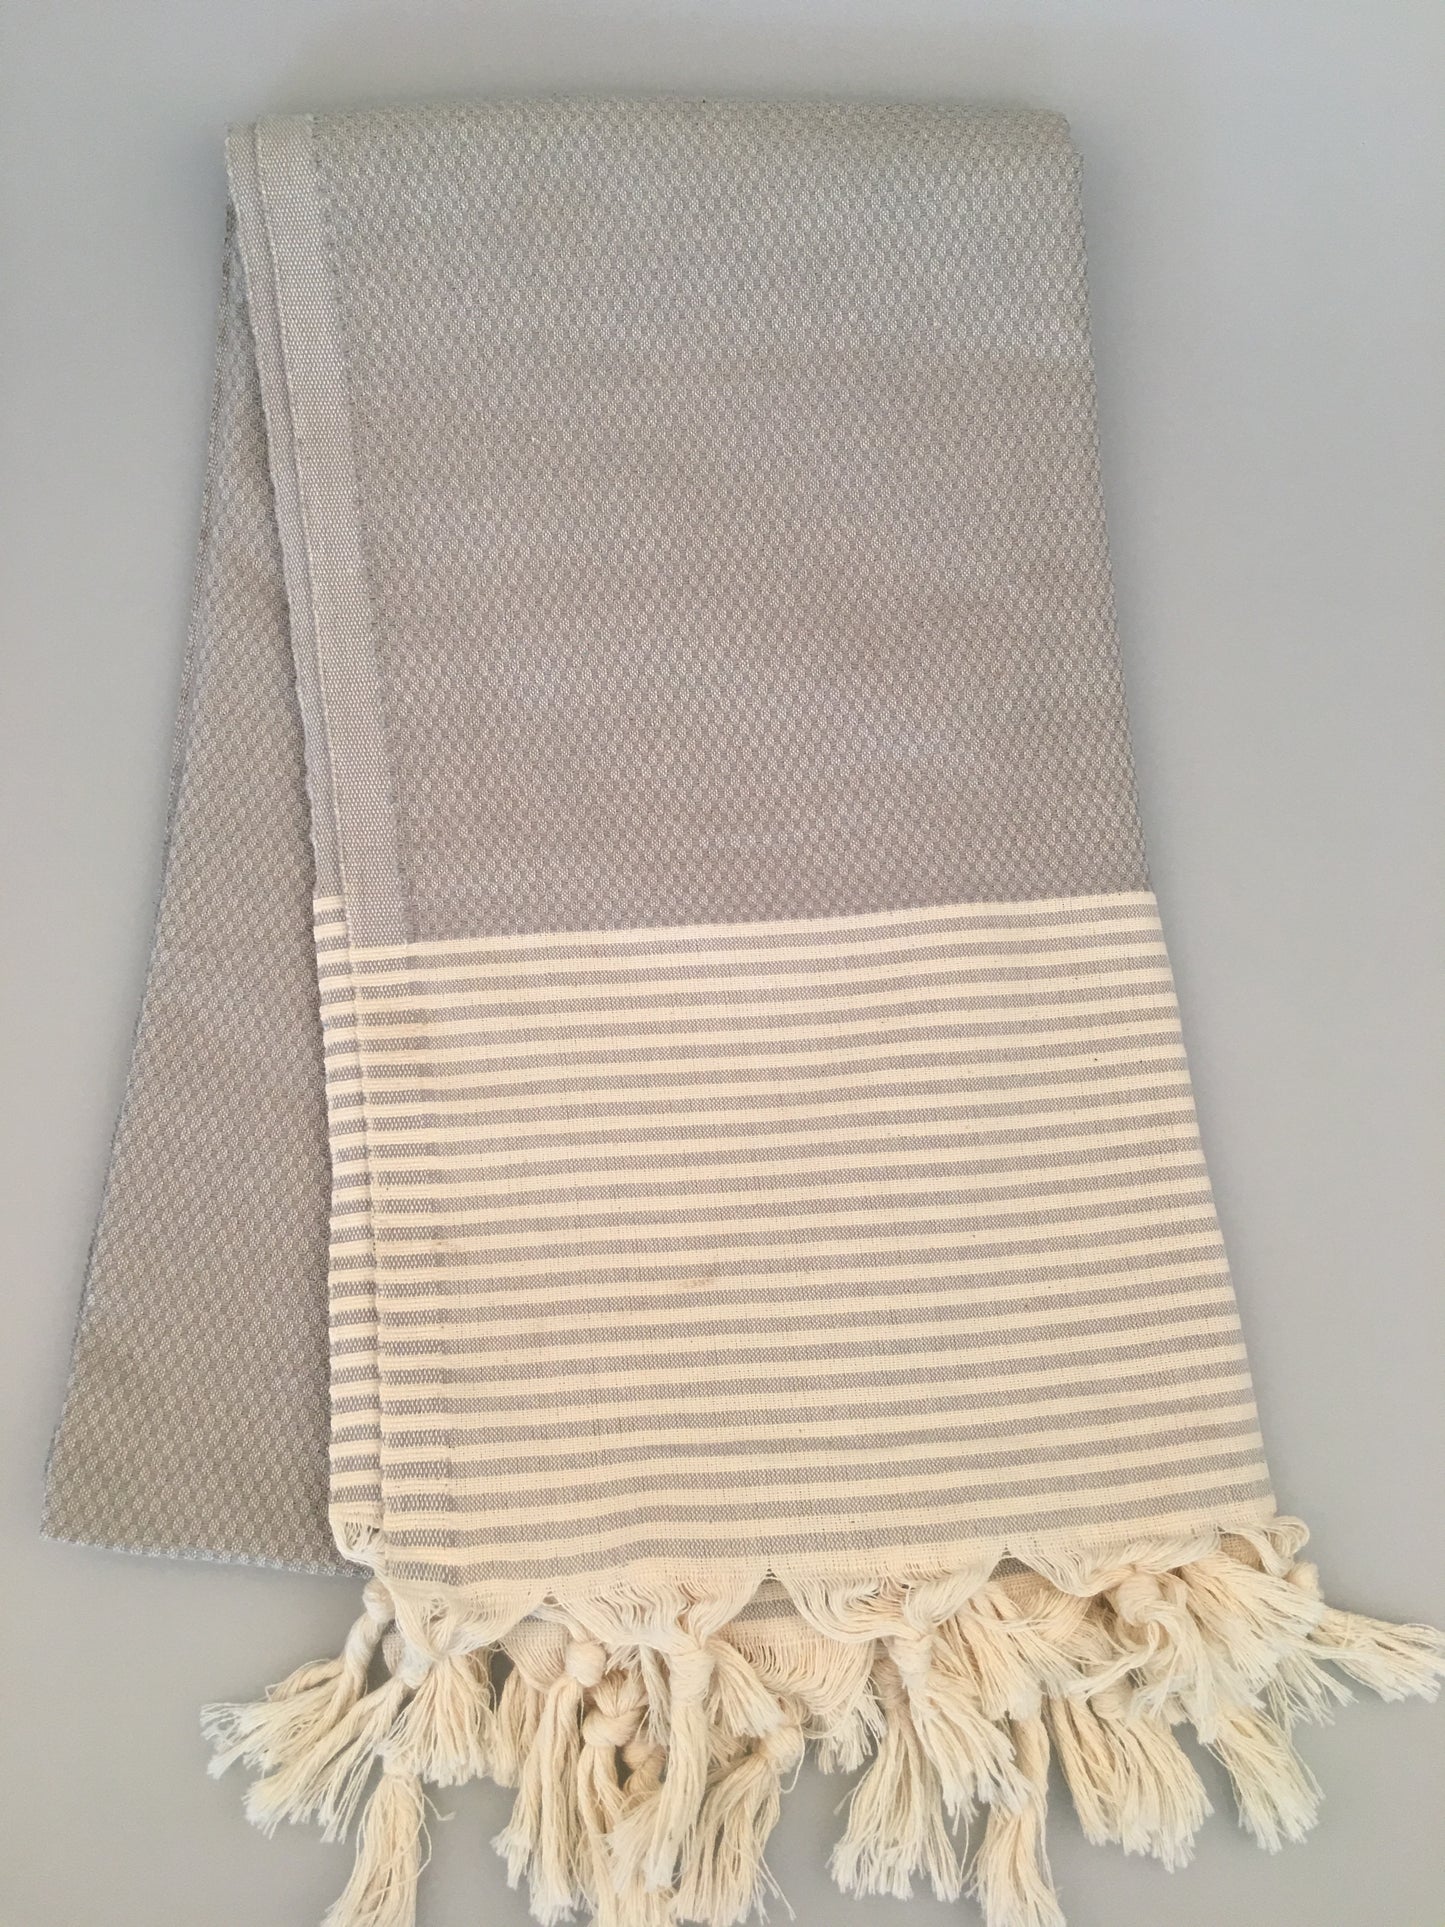 200pcs/LOT Miletus Turkish Towel Peshtemal (360g) - Wholesale Price